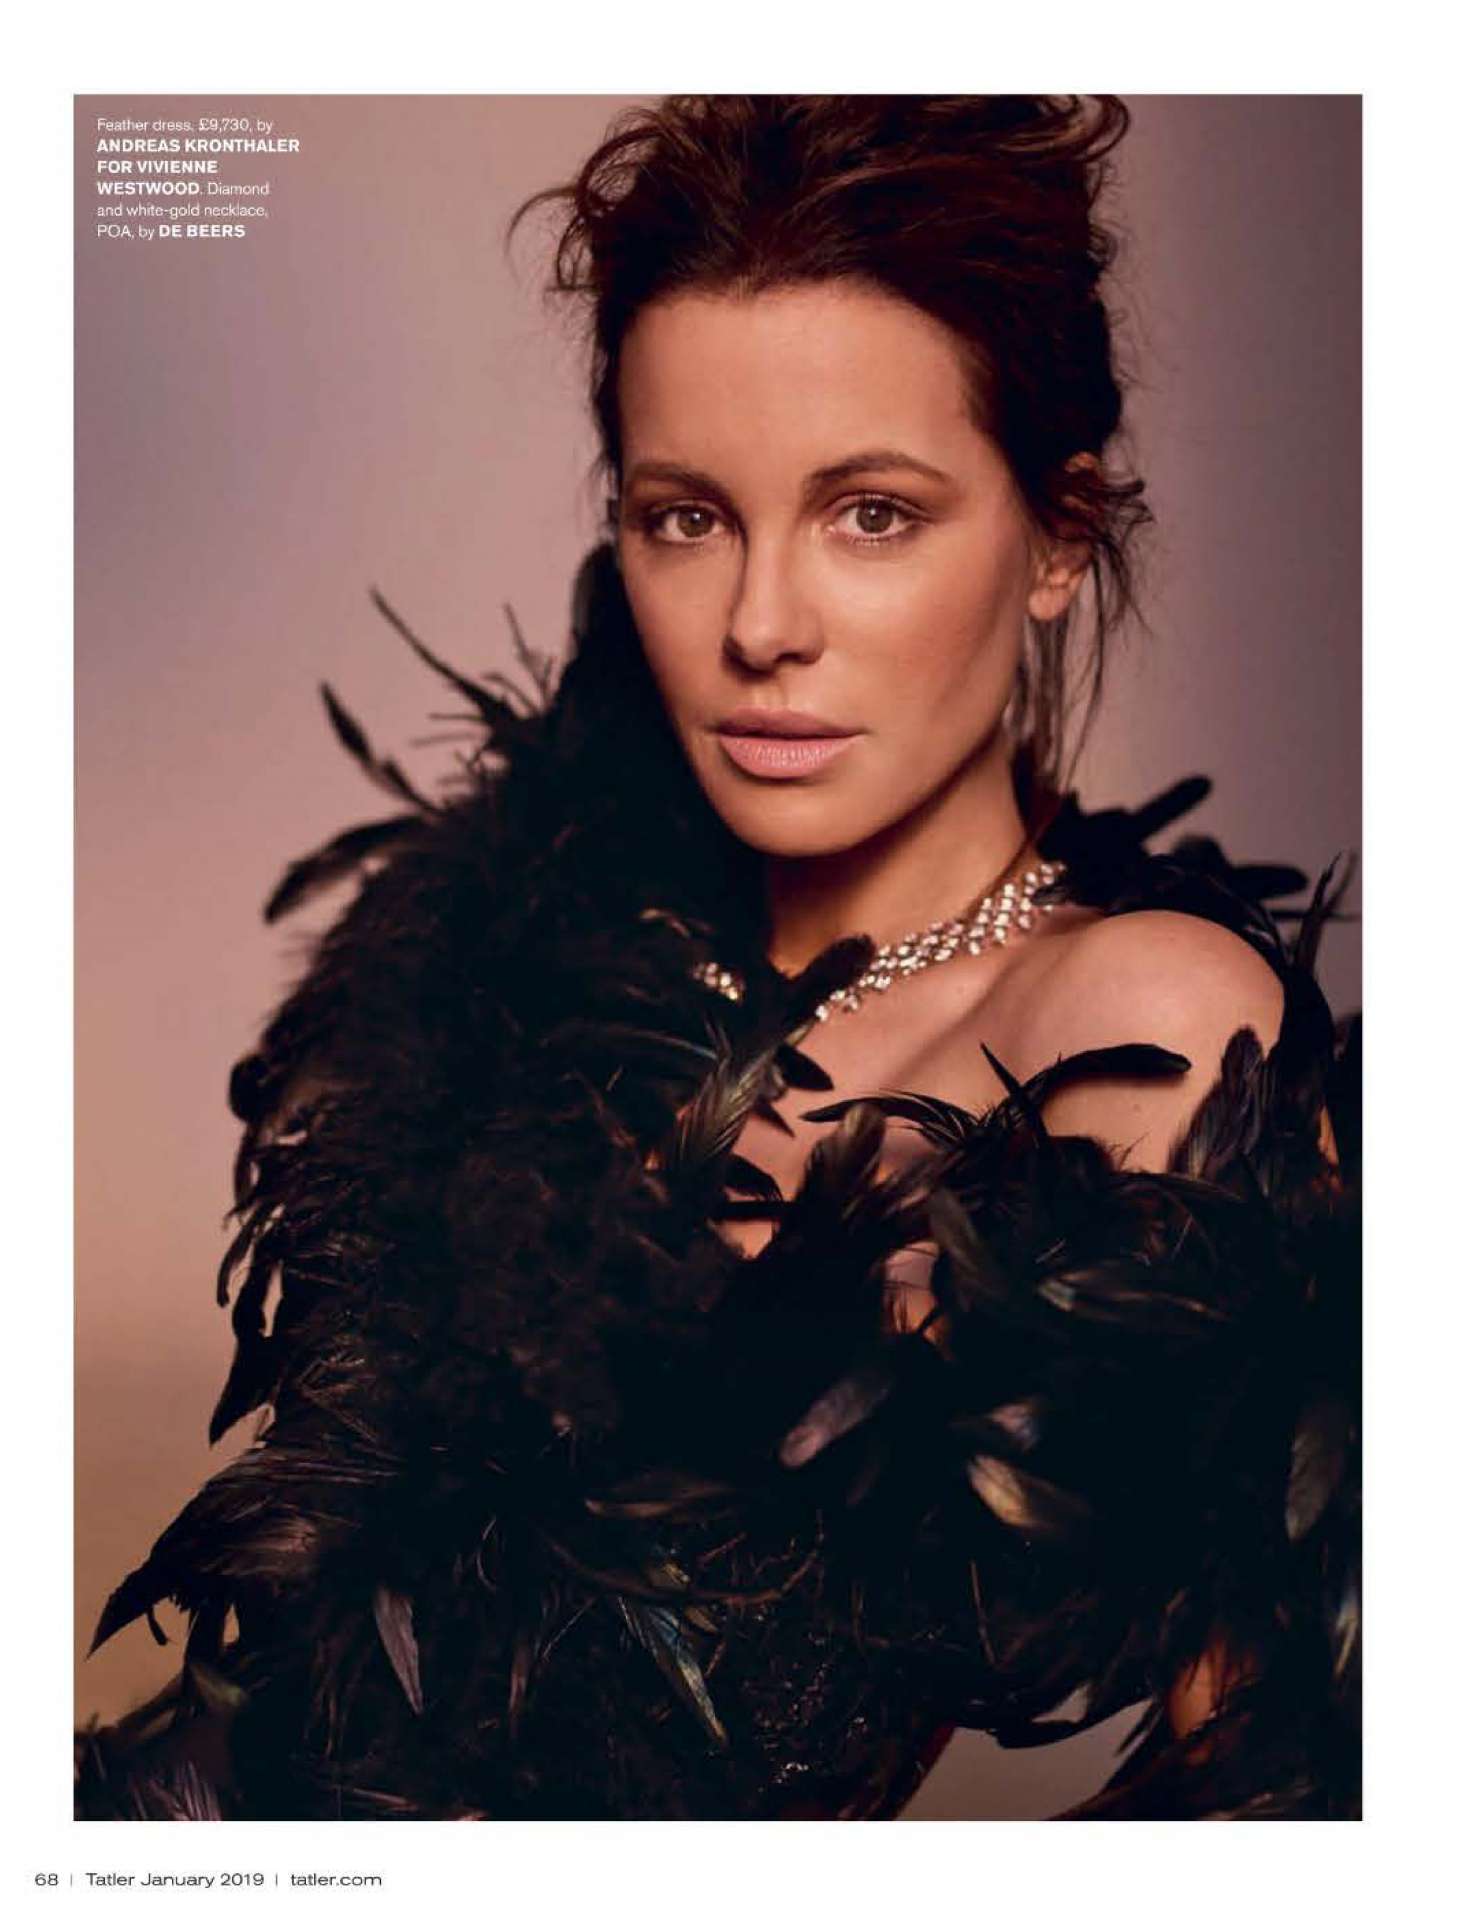 Kate Beckinsale â€“ Tatler Russia Magazine (January 2019) adds